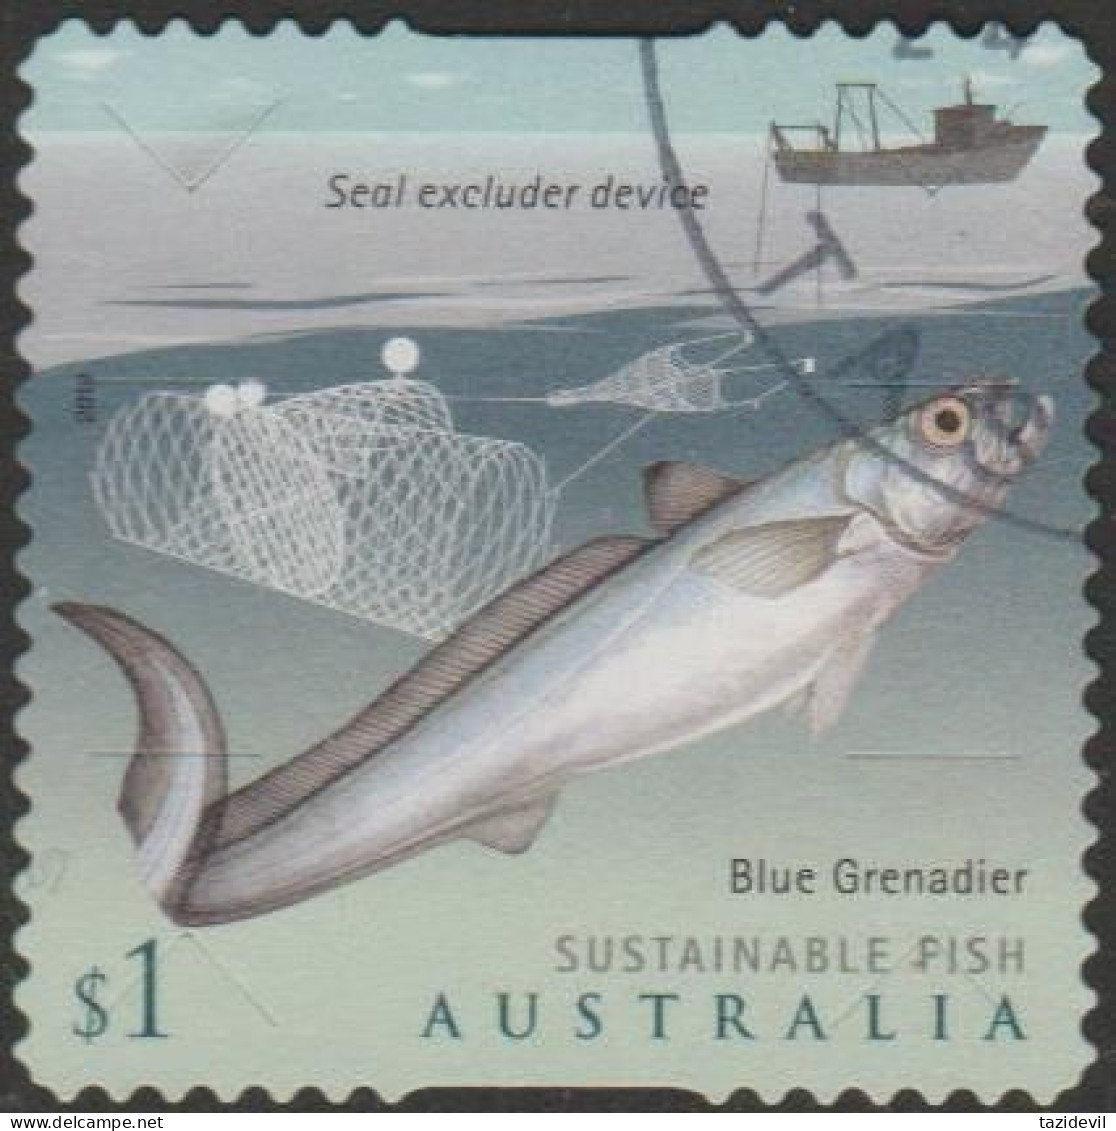 AUSTRALIA - DIE-CUT - USED - 2019 $1.00 Sustainable Fish - Blue Grenadier - Used Stamps